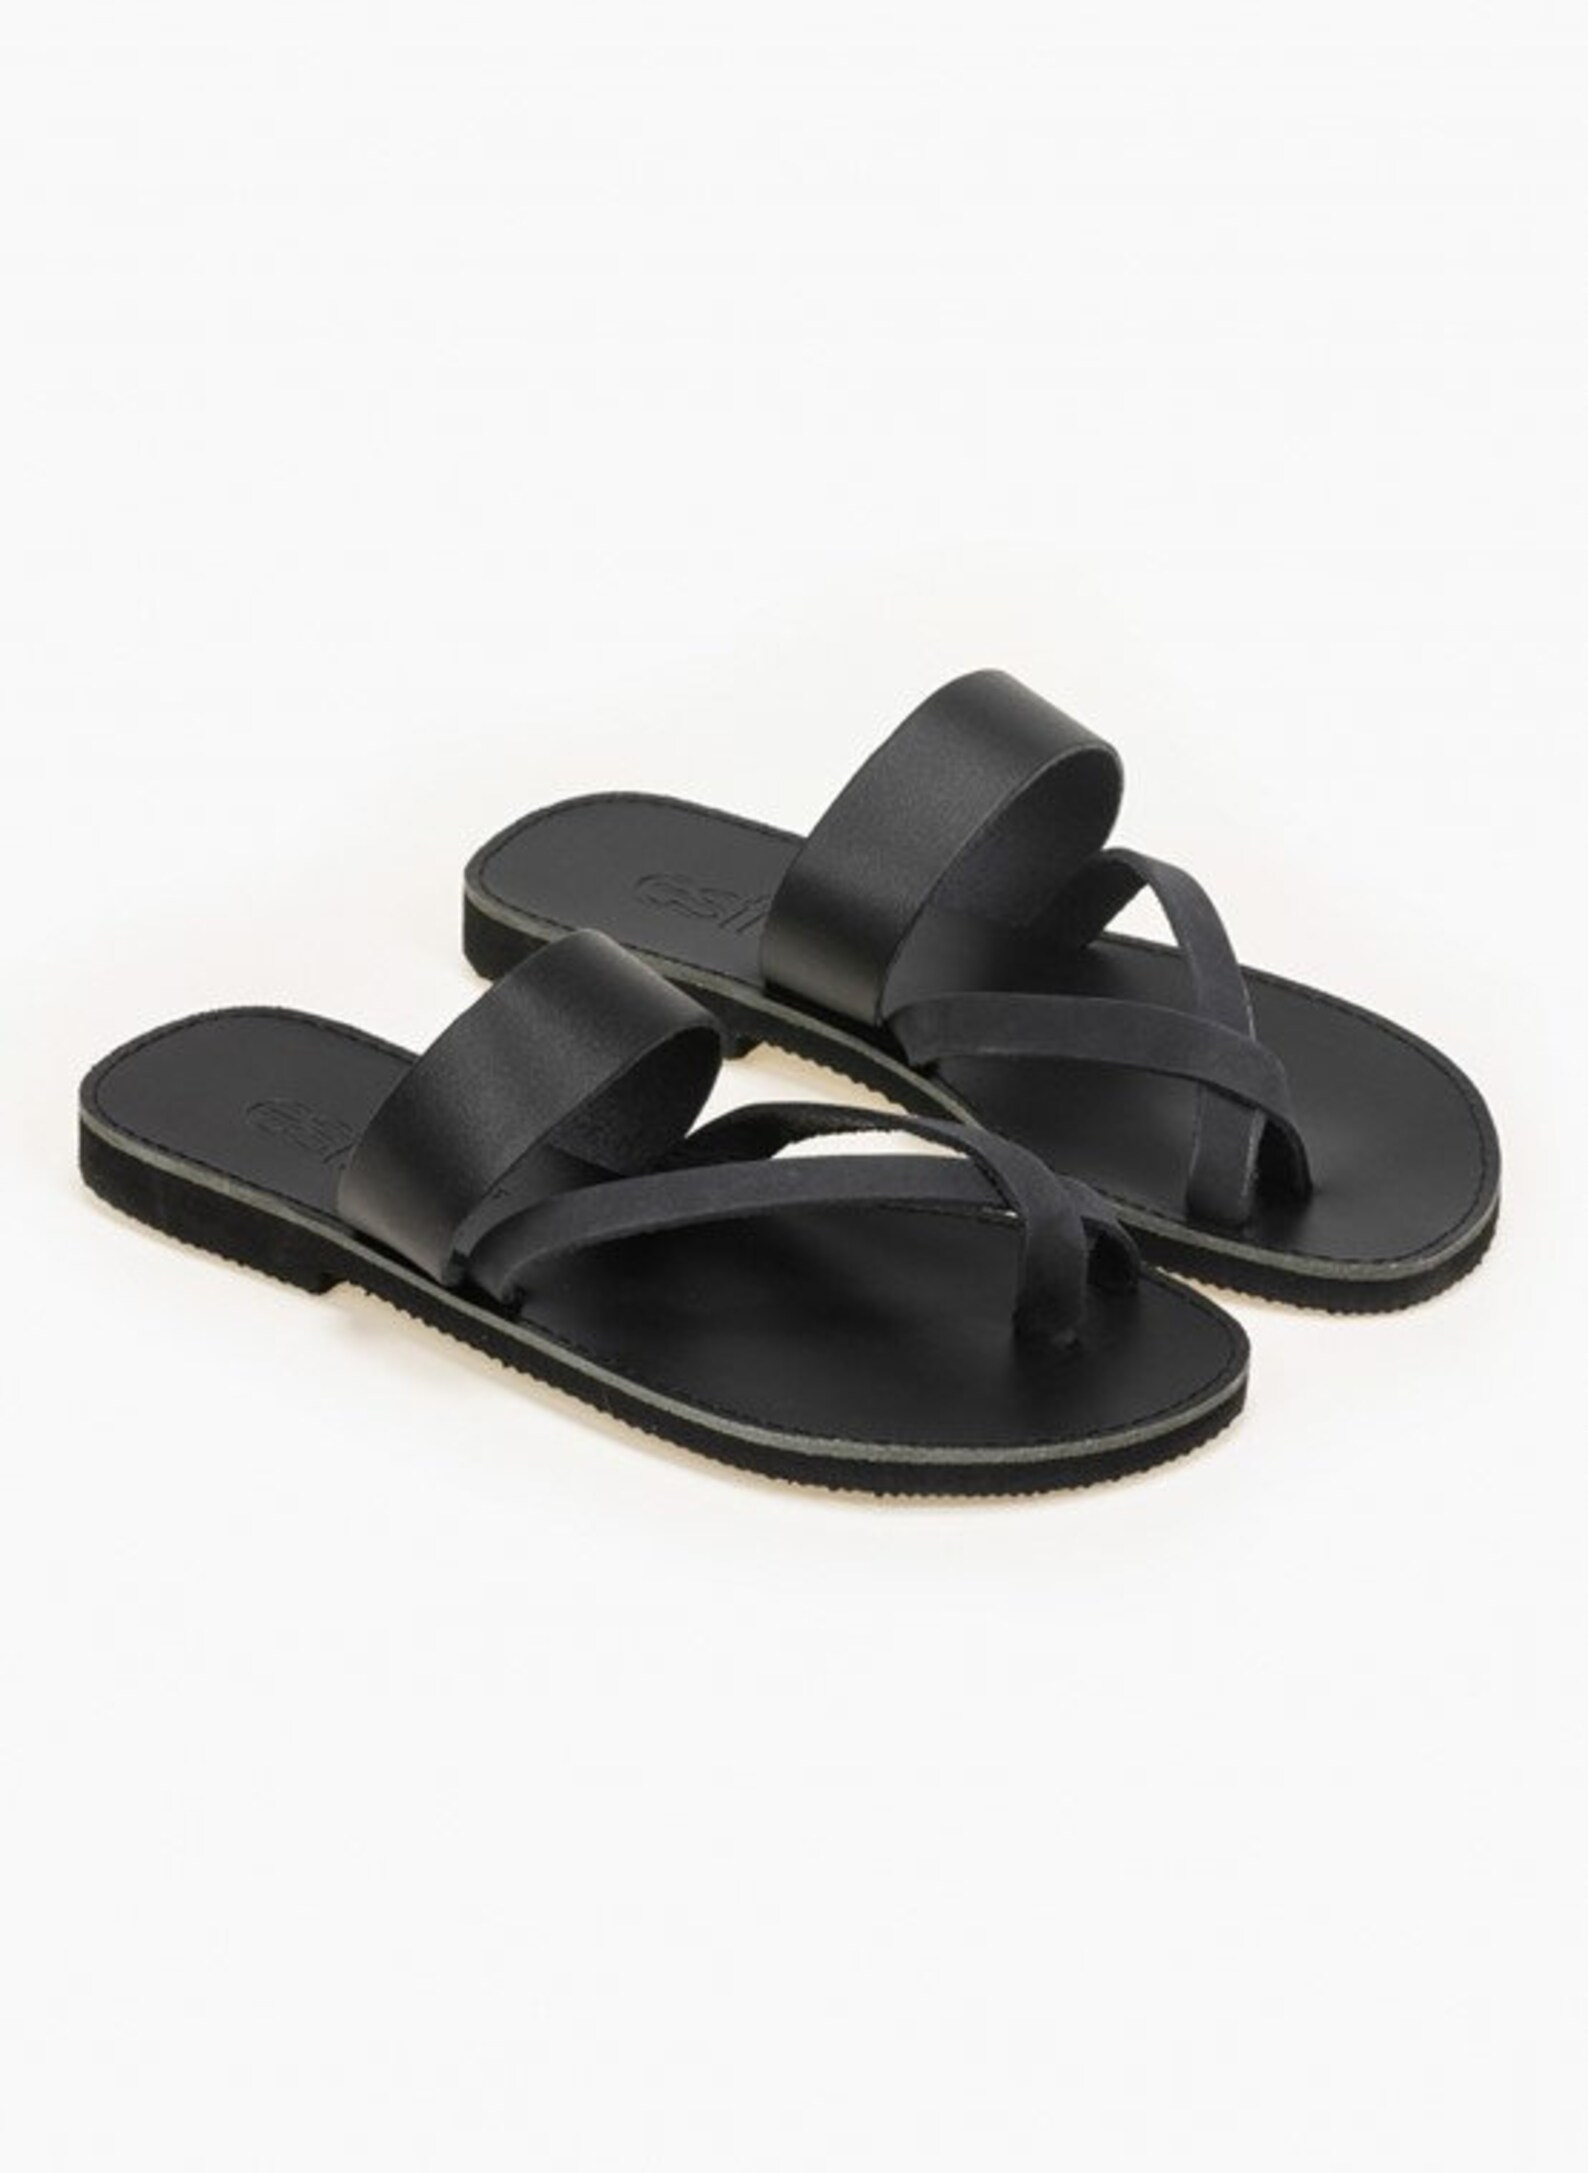 Greek Genuine leather Summer Sandals Greek Style | Etsy